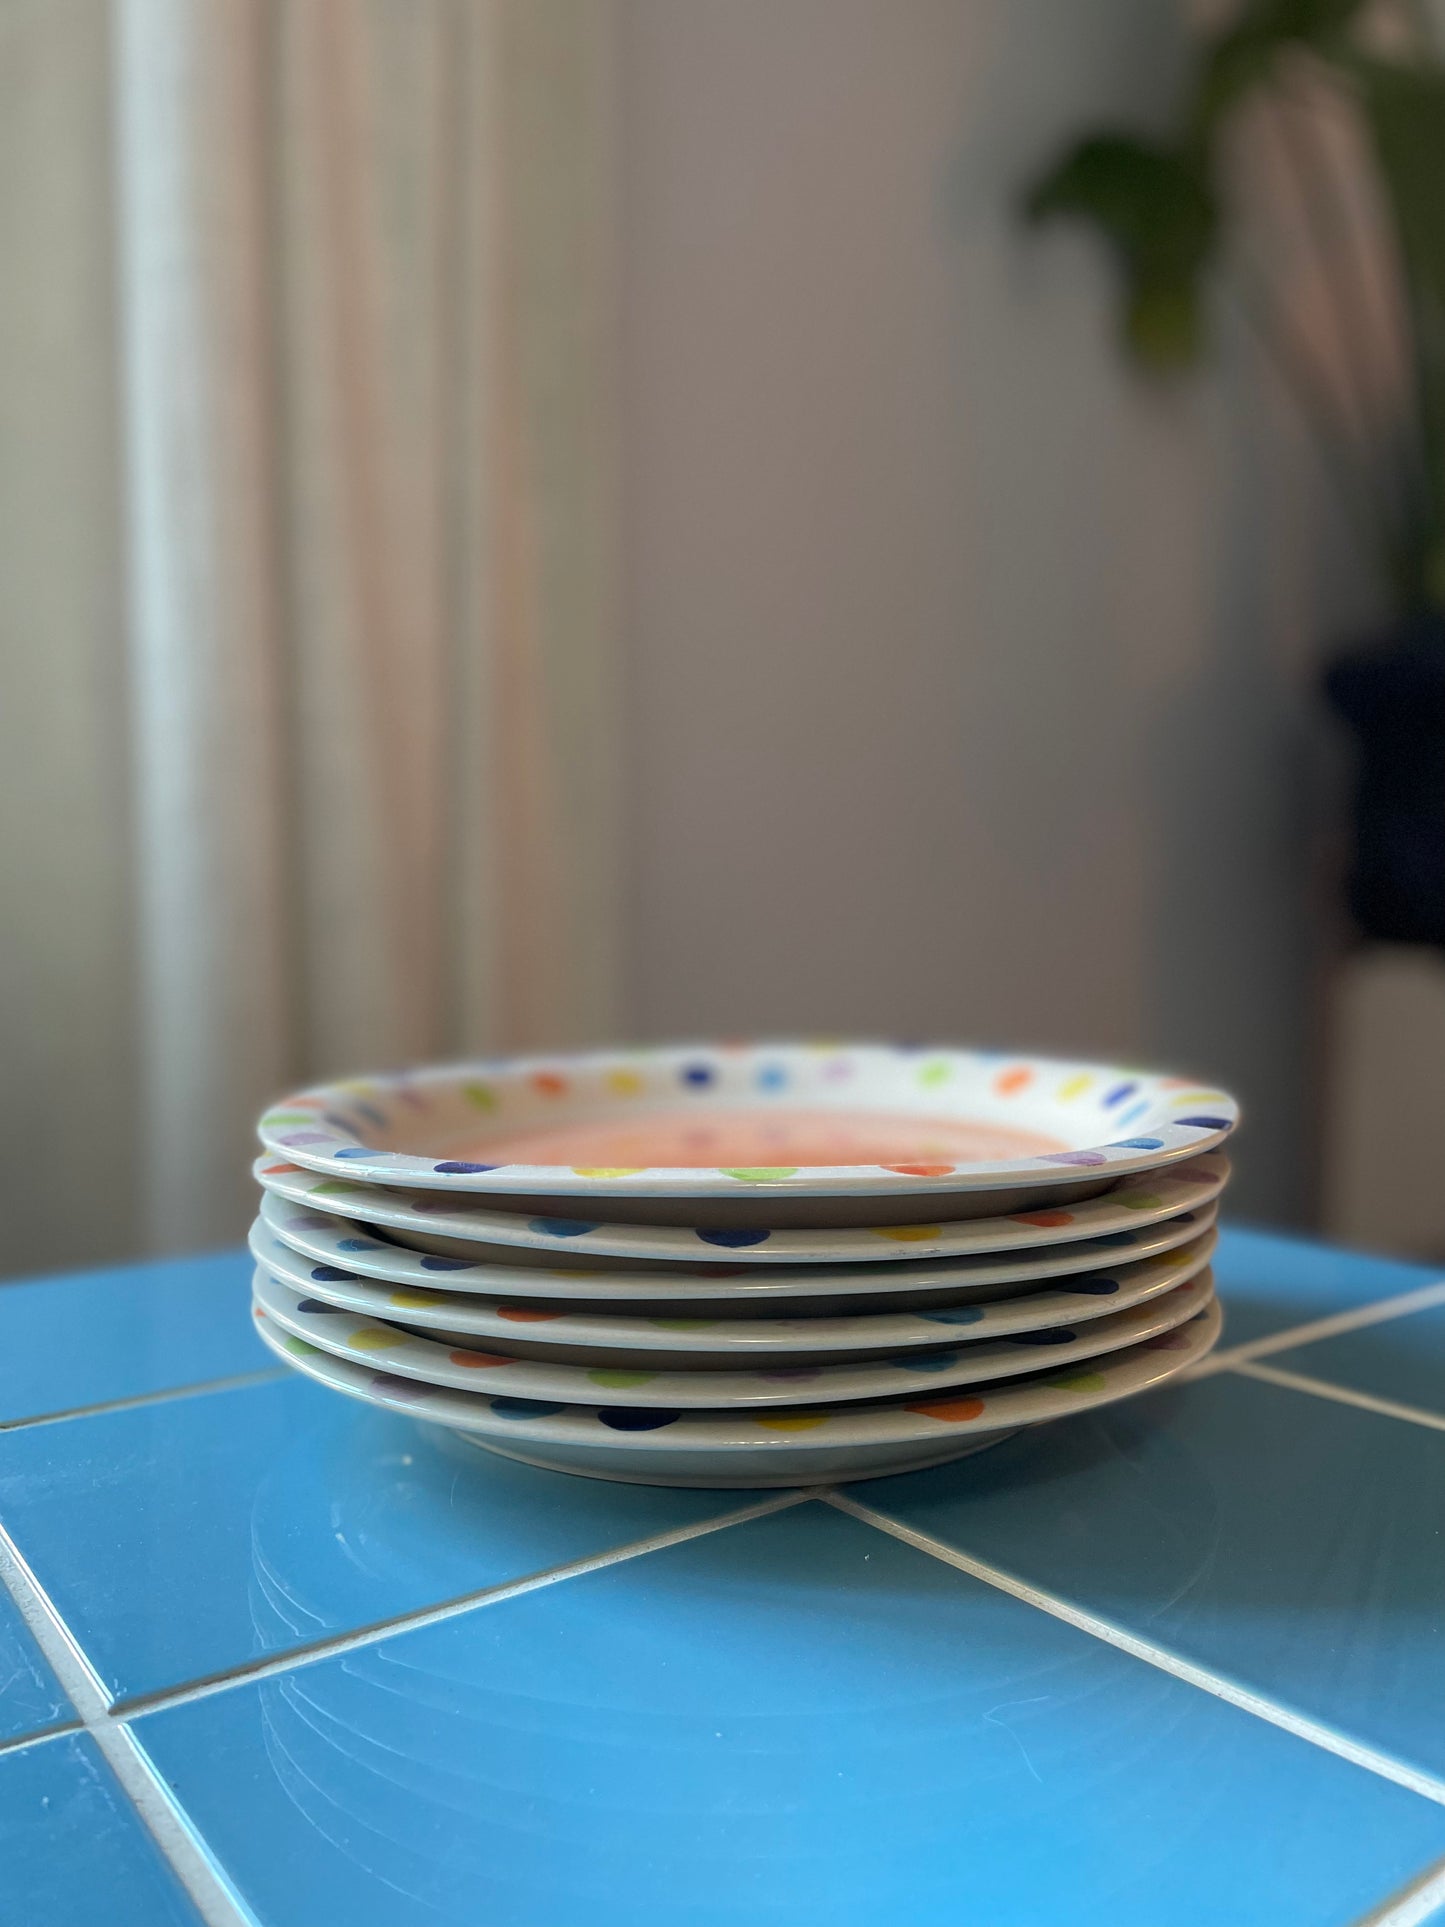 Tivoli-style dinner plates with an orange center